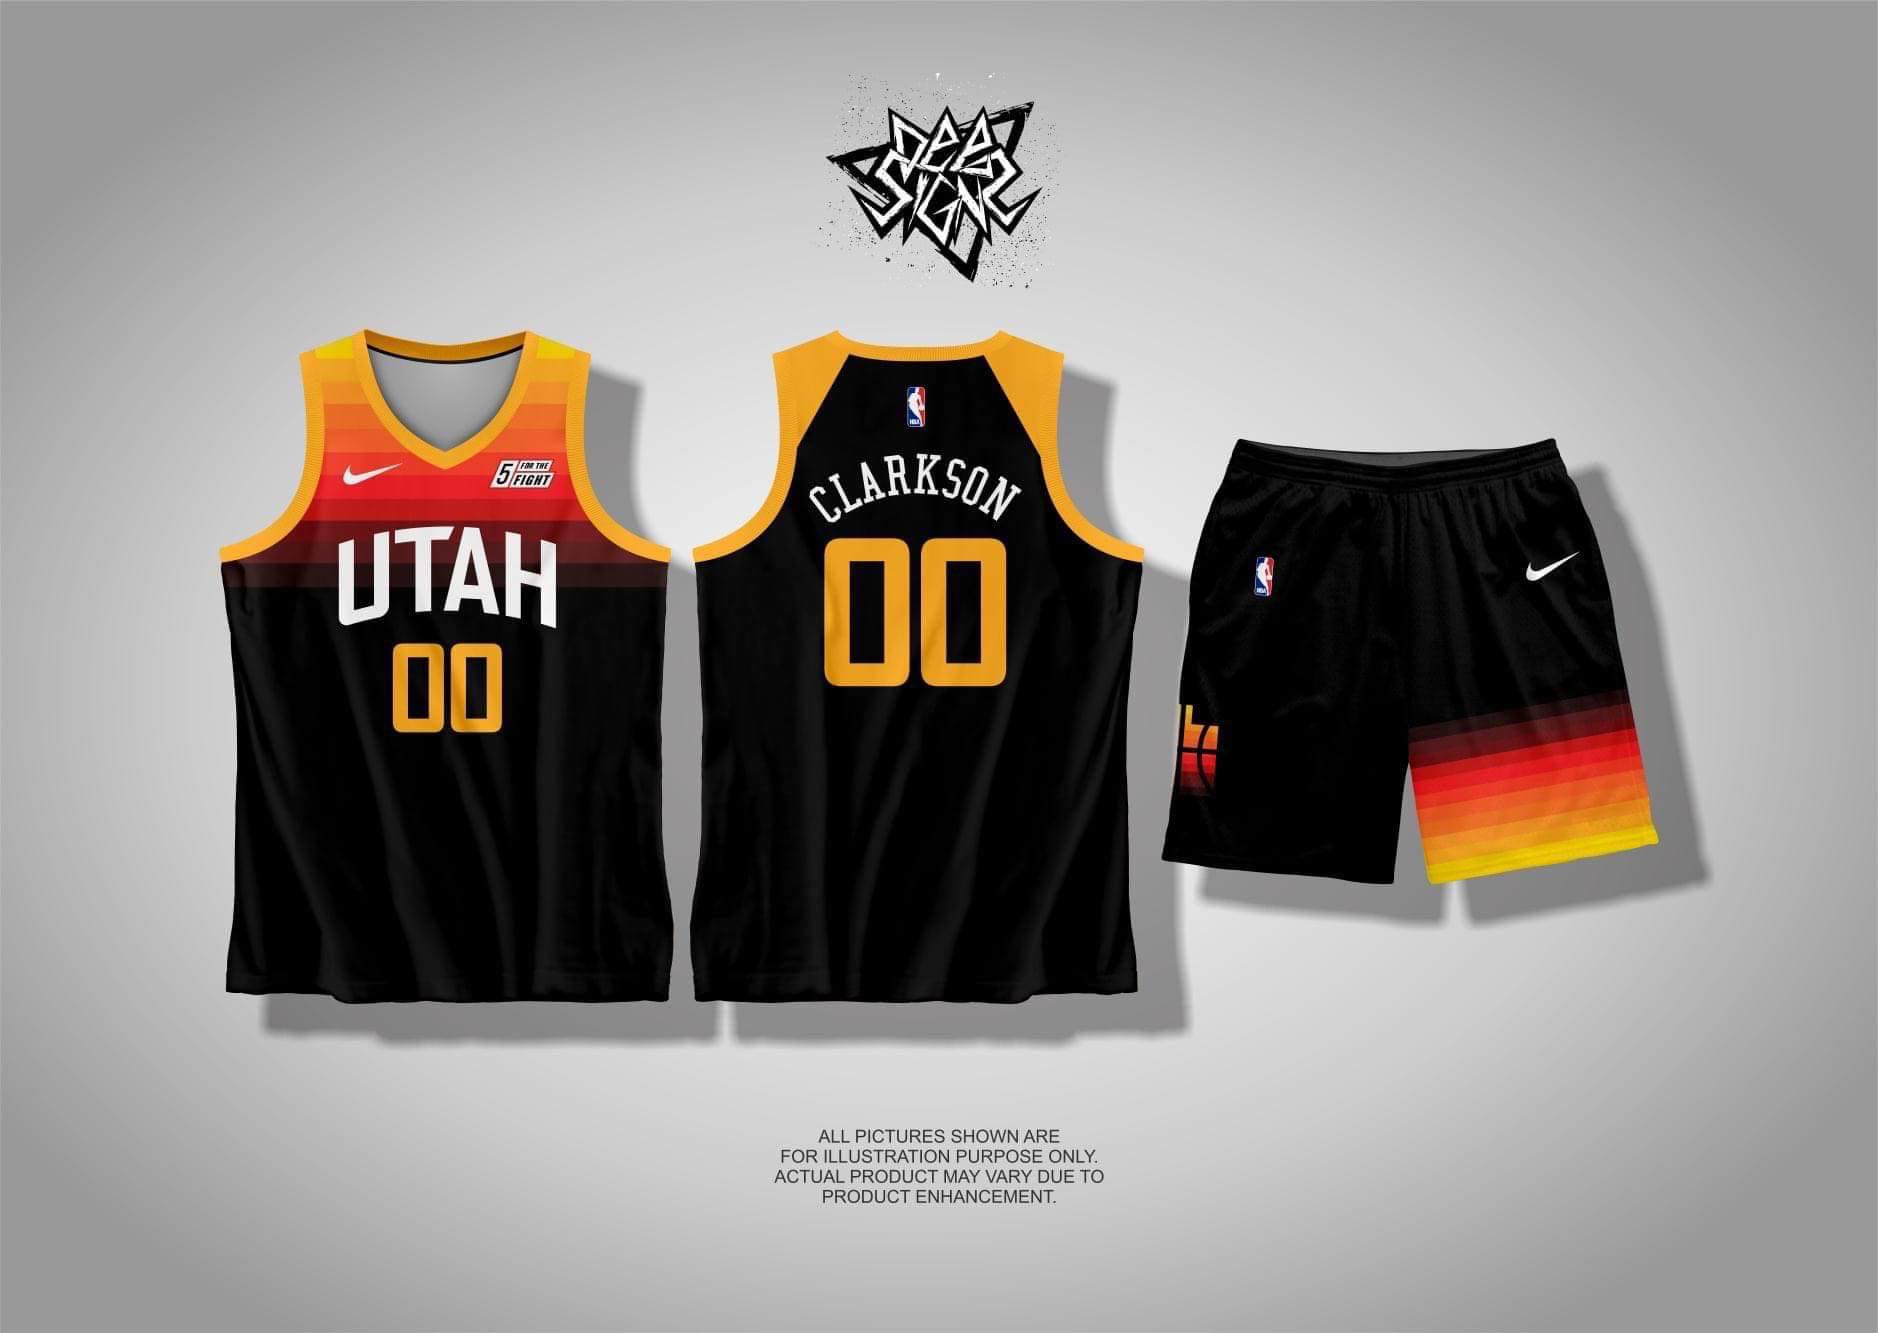 I AM PHILIPPINES - Imagine seeing KAPAYAPAAN on a Utah Jazz jersey!  😍🇵🇭 Jordan Clarkson (📷: Basketball Republic)